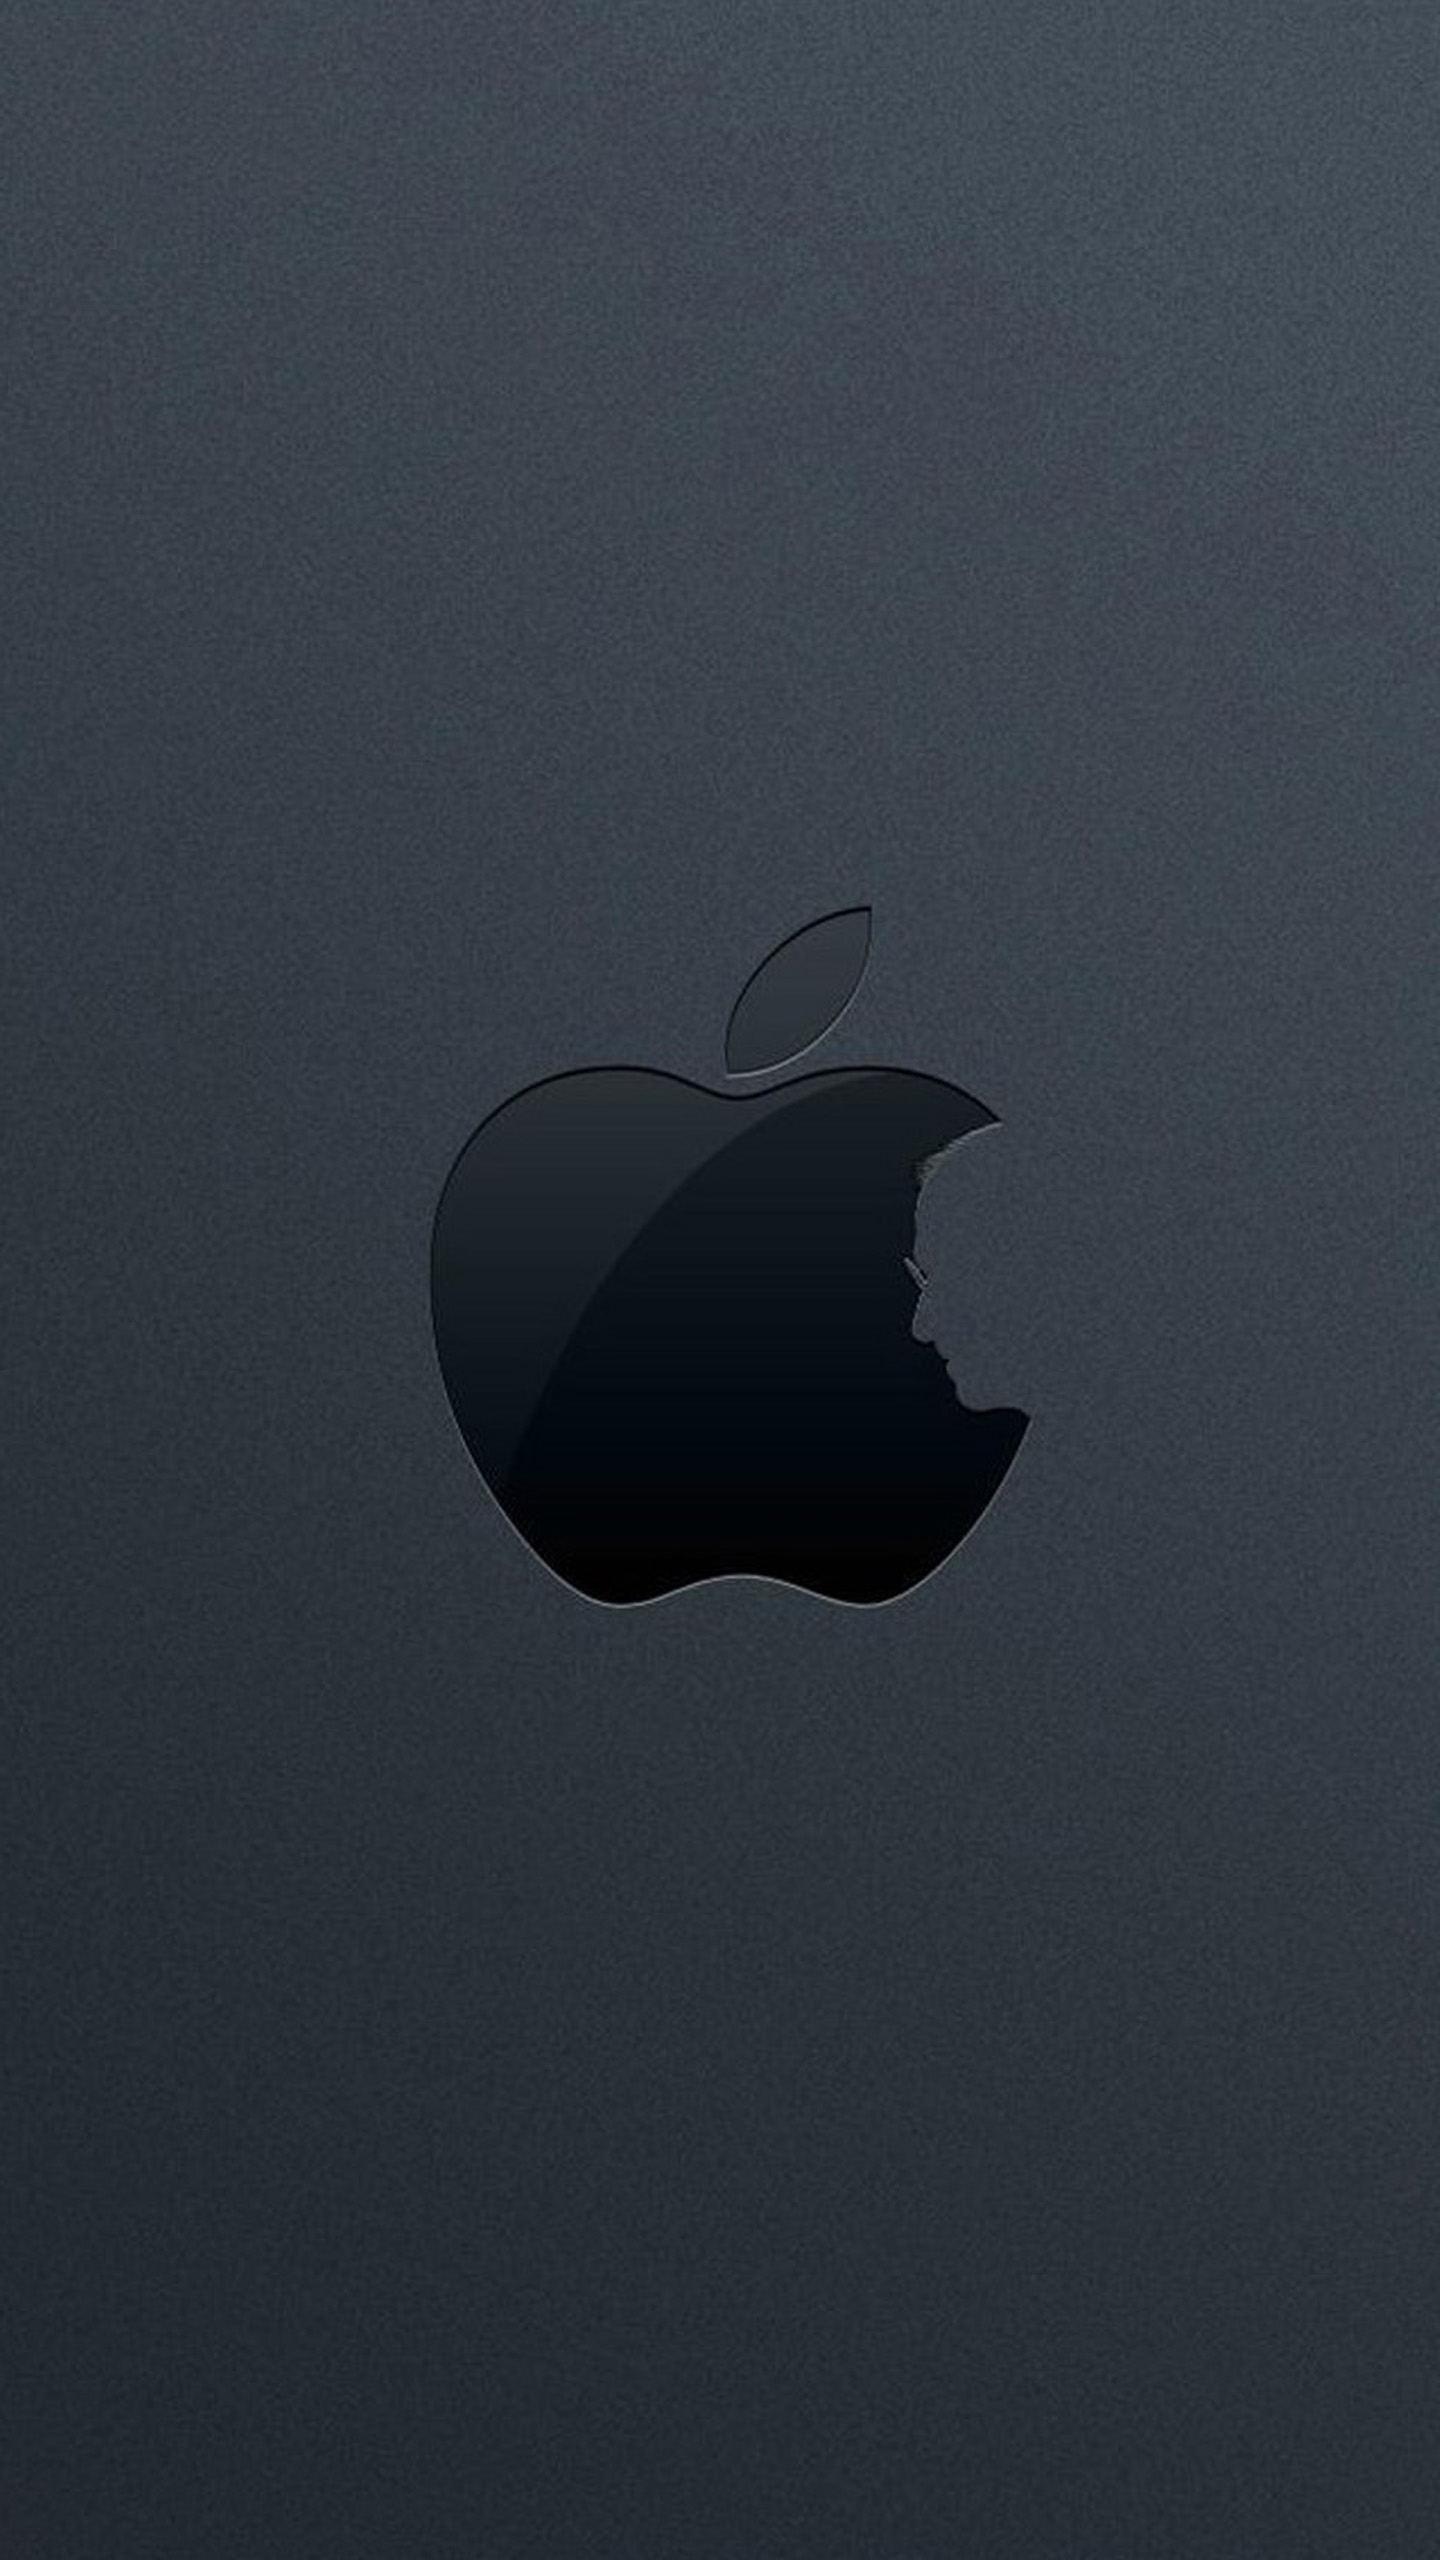 Black Apple logo 5 Galaxy S6 Wallpaper Galaxy S6 Backgrounds